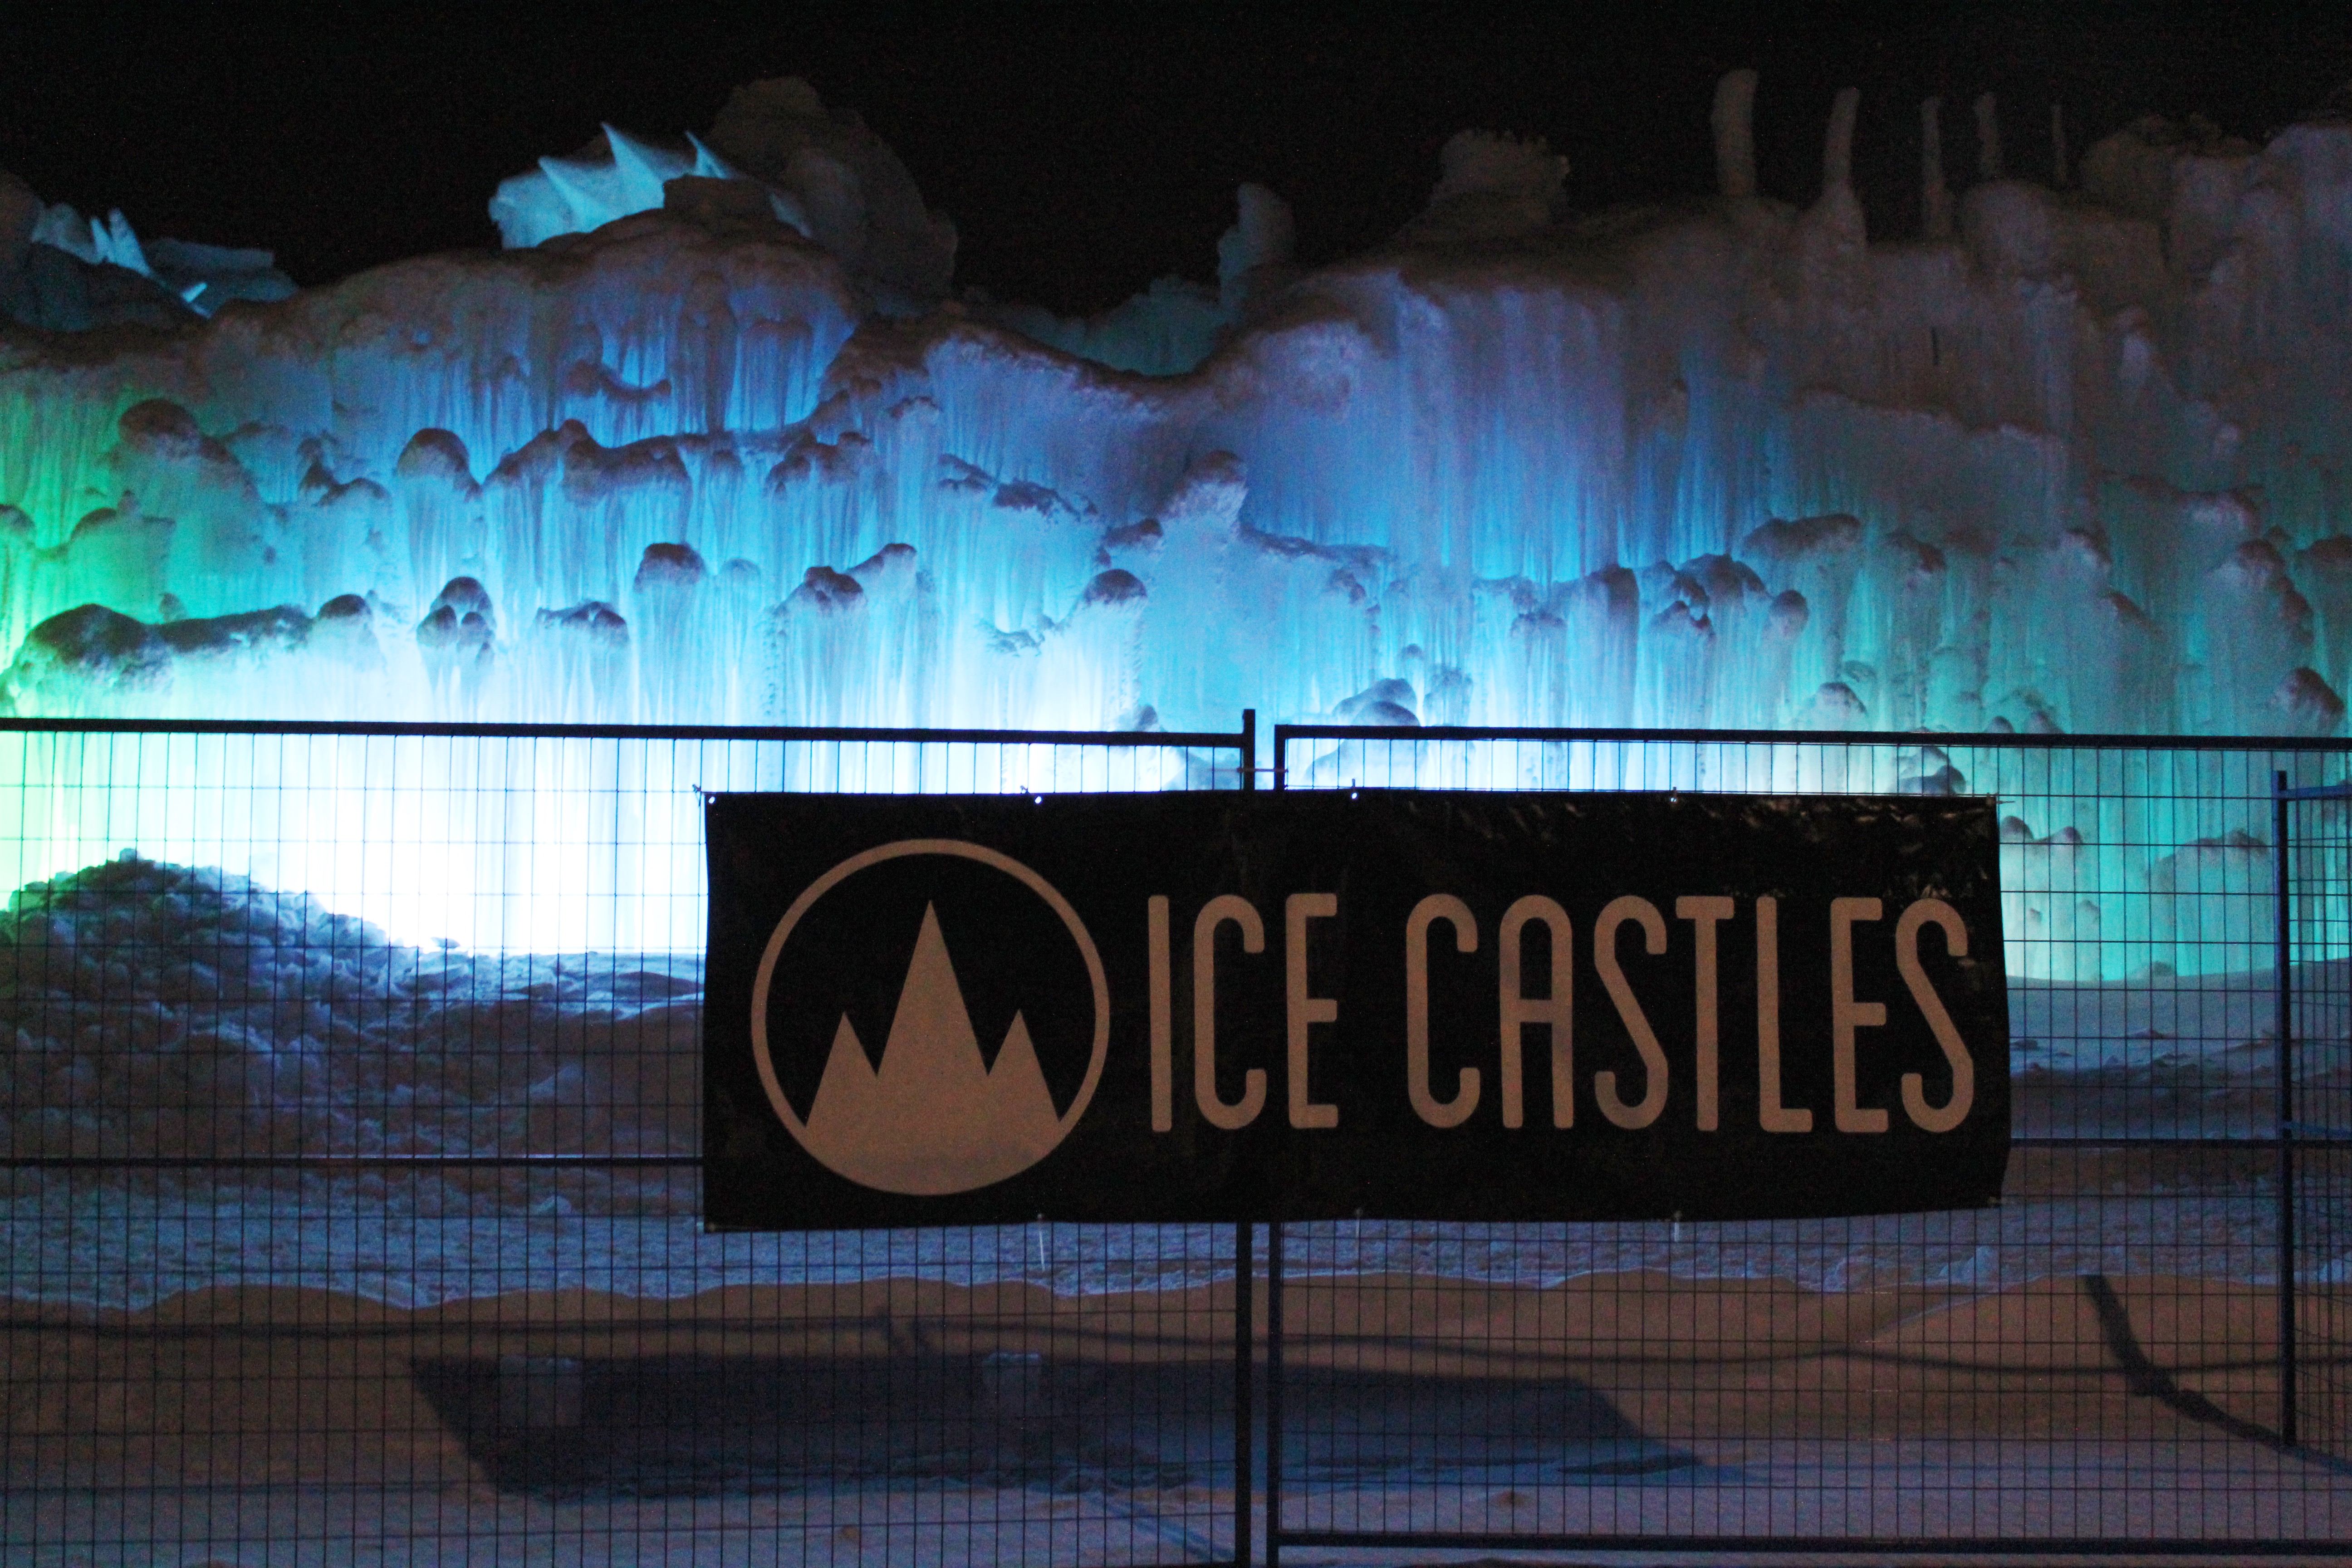 Edmonton Ice Castles